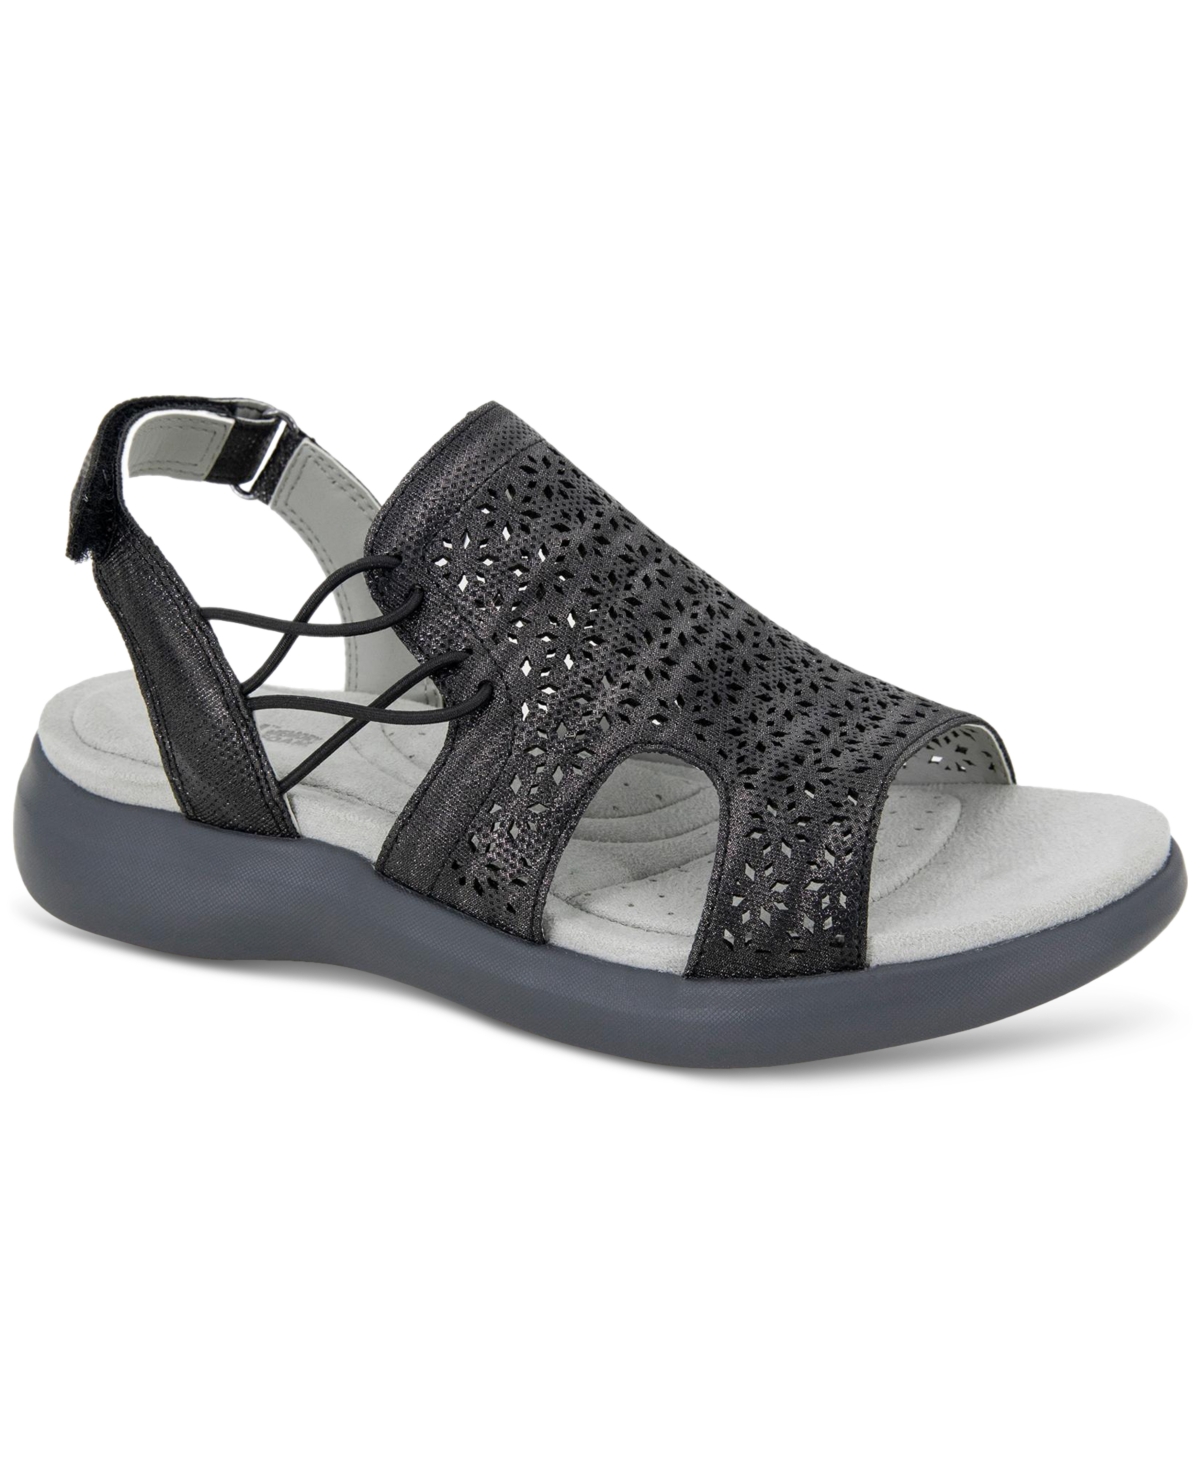 Jbu Women's Francis Slip-On Strappy Slingback Sandals Women's Shoes